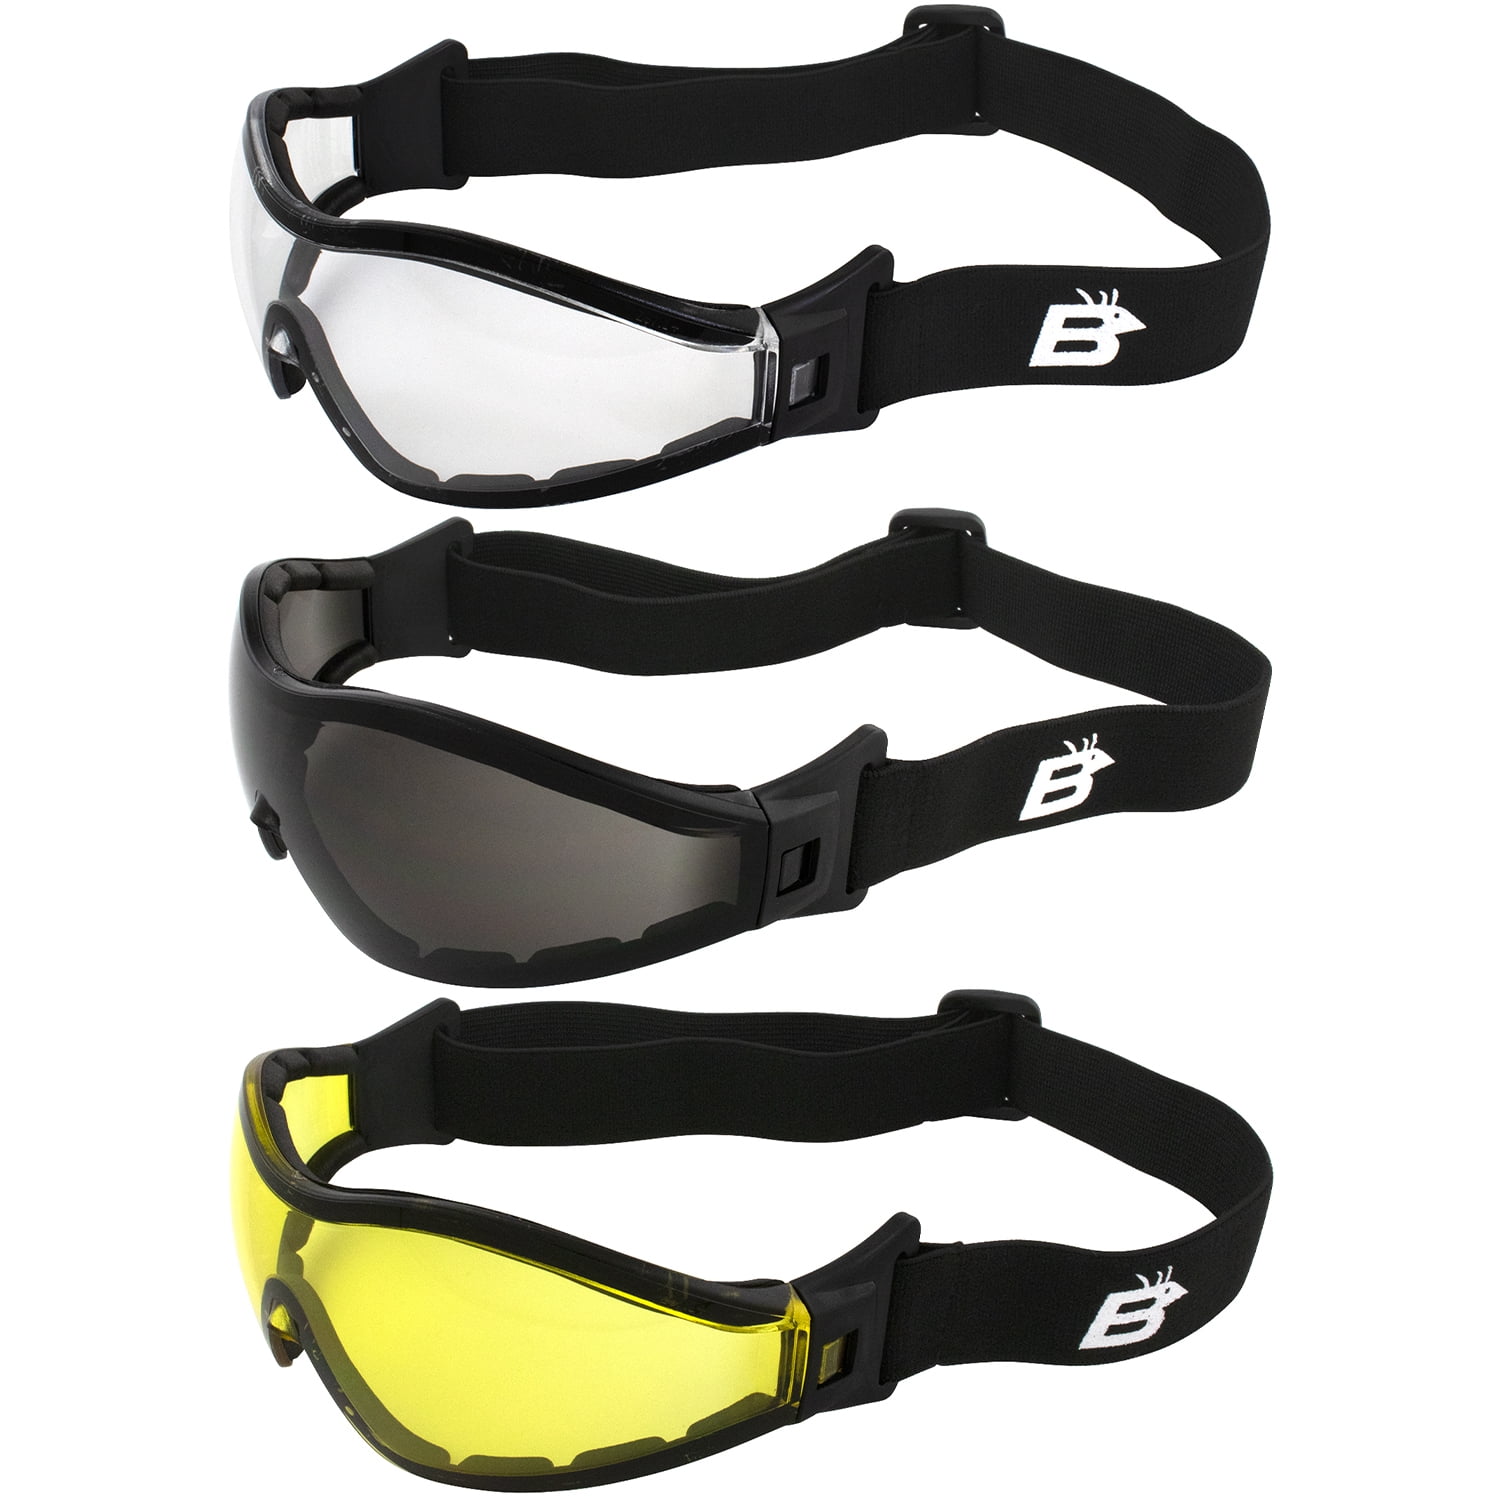 Birdz Eyewear Boogie Foam Padded Motorcycle Ski Skydiving Z87.1 Safety Goggles Blue Mirror Anti-Fog Scratch-Resistant Lenses 